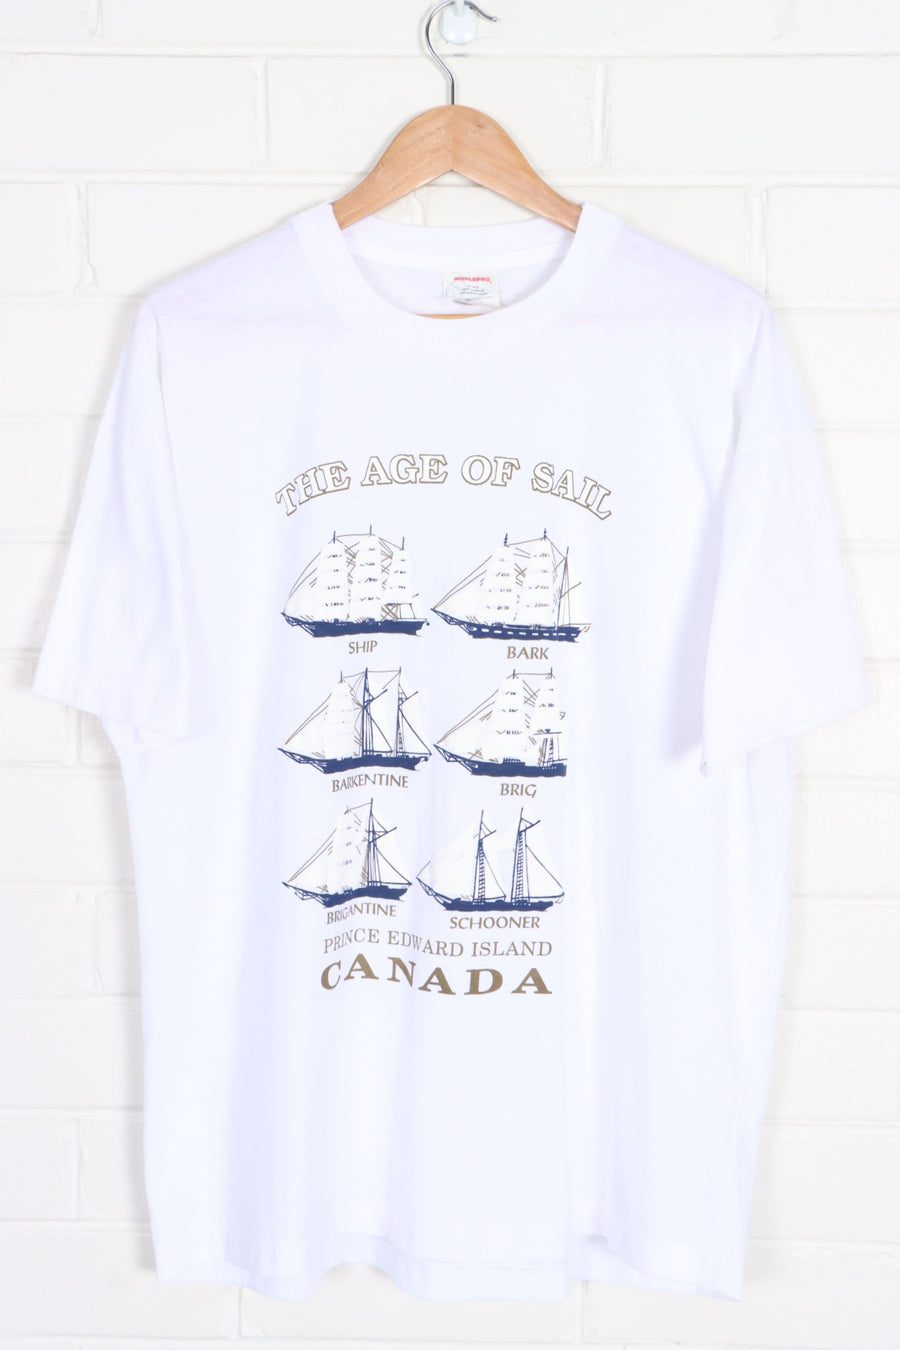 Sail Ship "Age of Sail" Single Stitch T-Shirt Canada Made (XL)